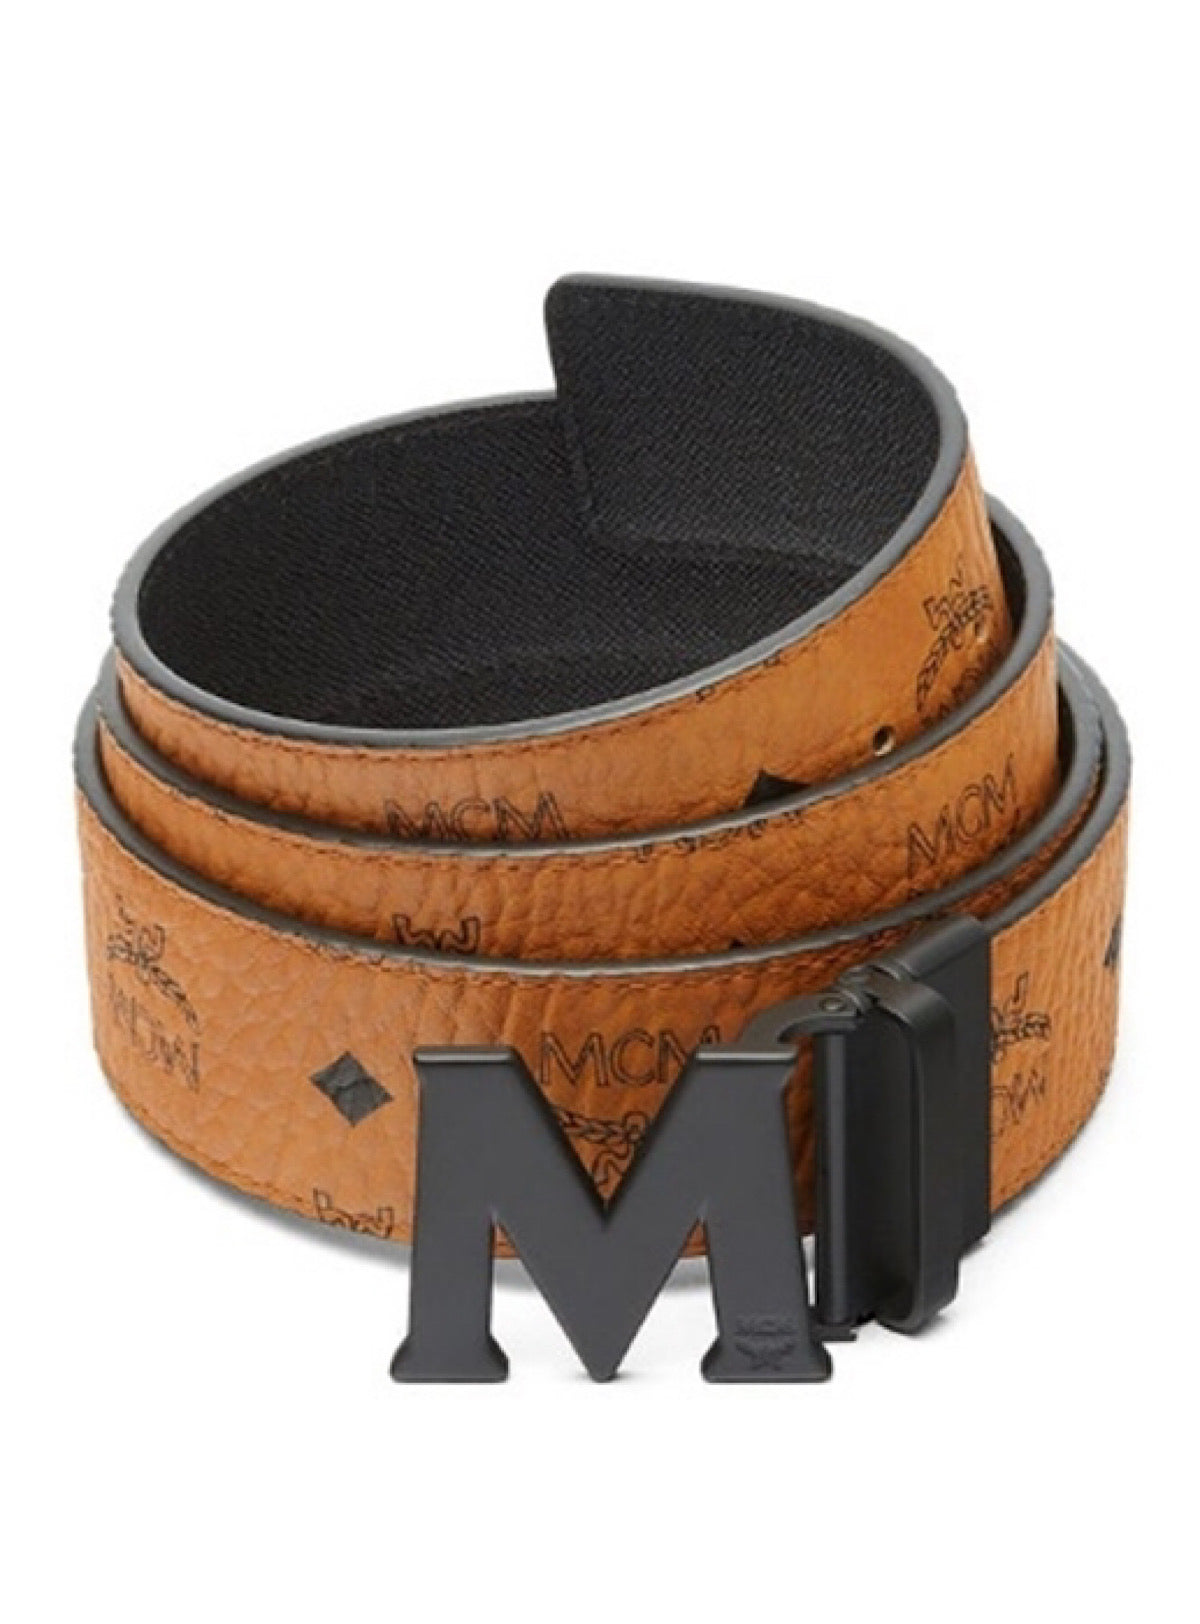 MCM Reversible M Buckle Monogram Belt Denim, $295